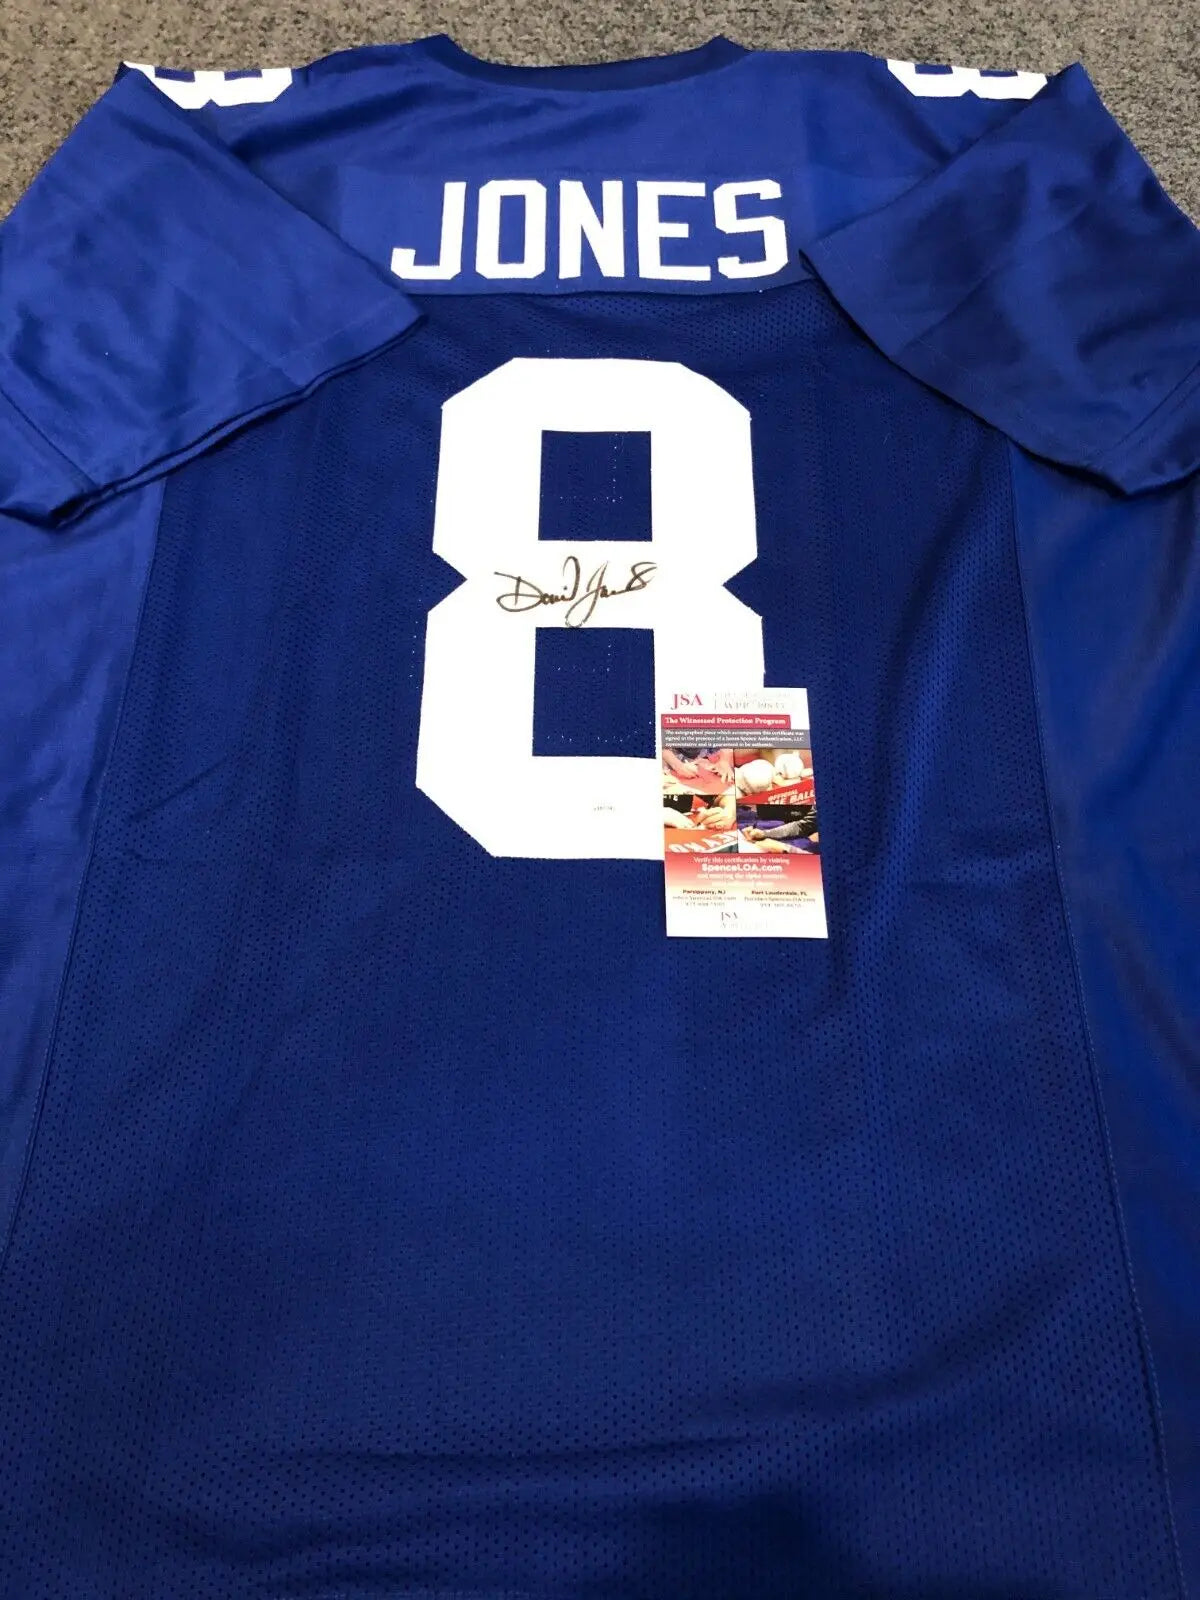 jones signed jersey